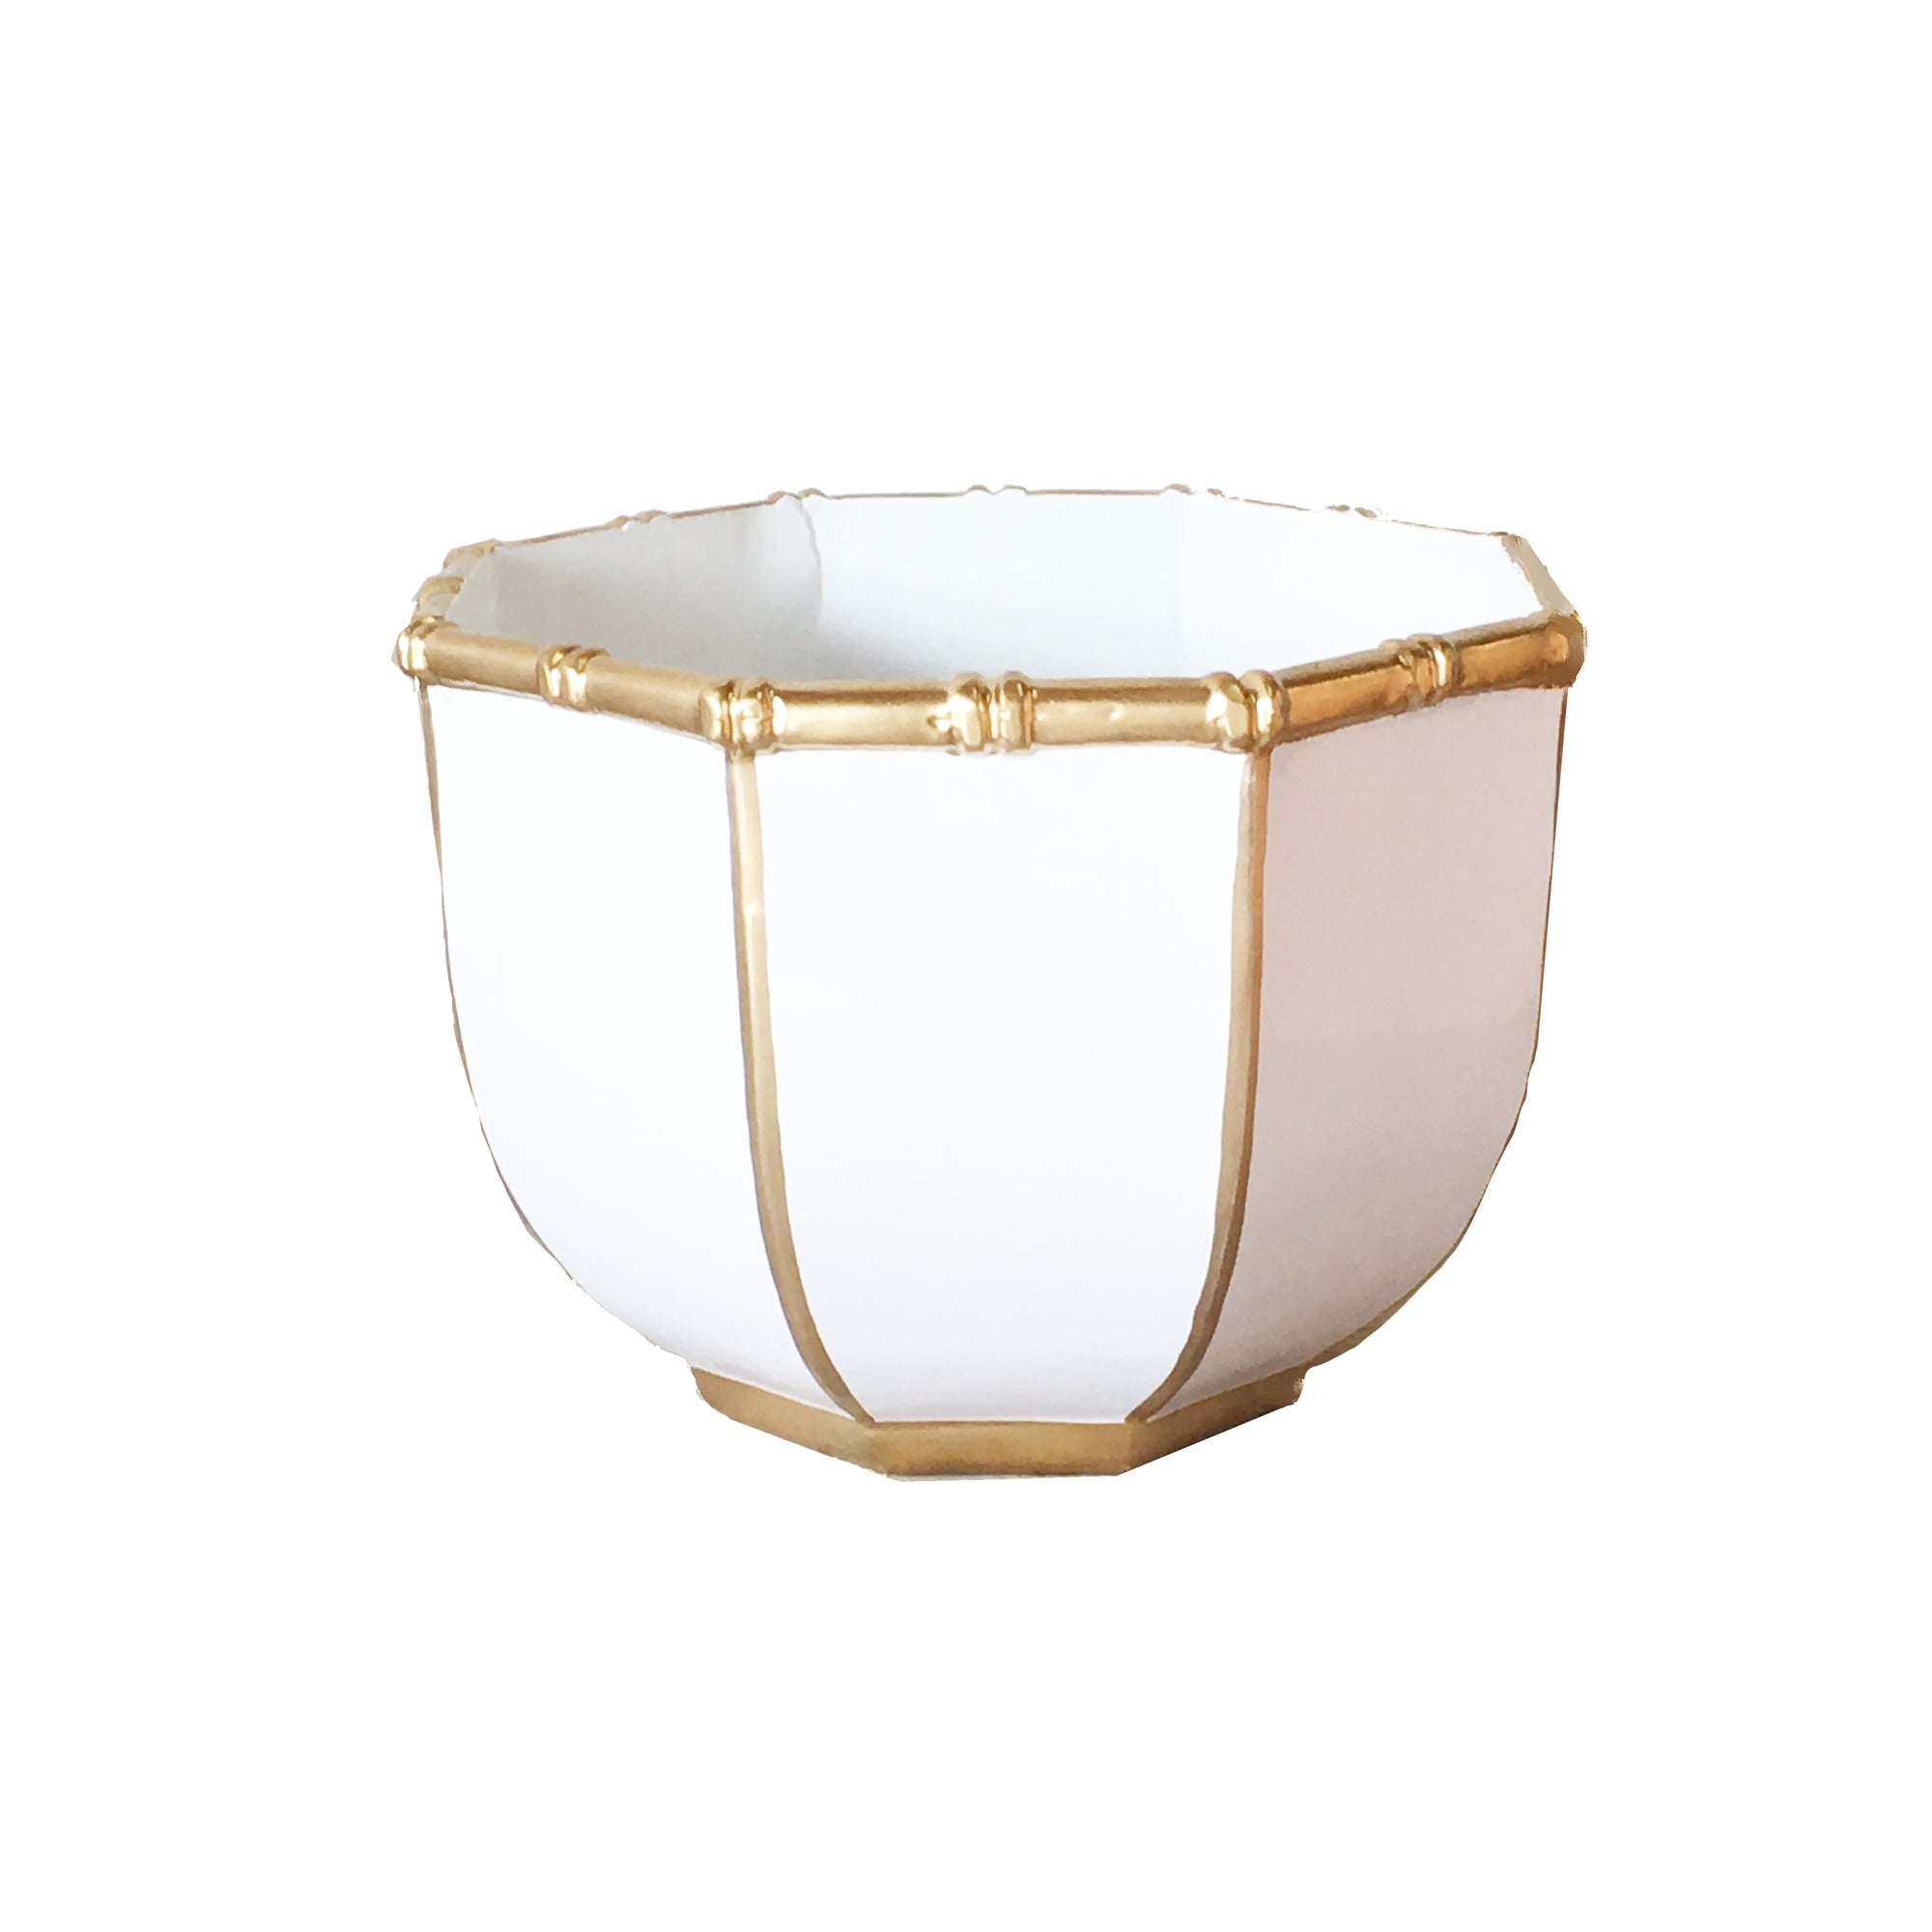 Dana Gibson Bamboo Bowl in White, Large 2ndQ